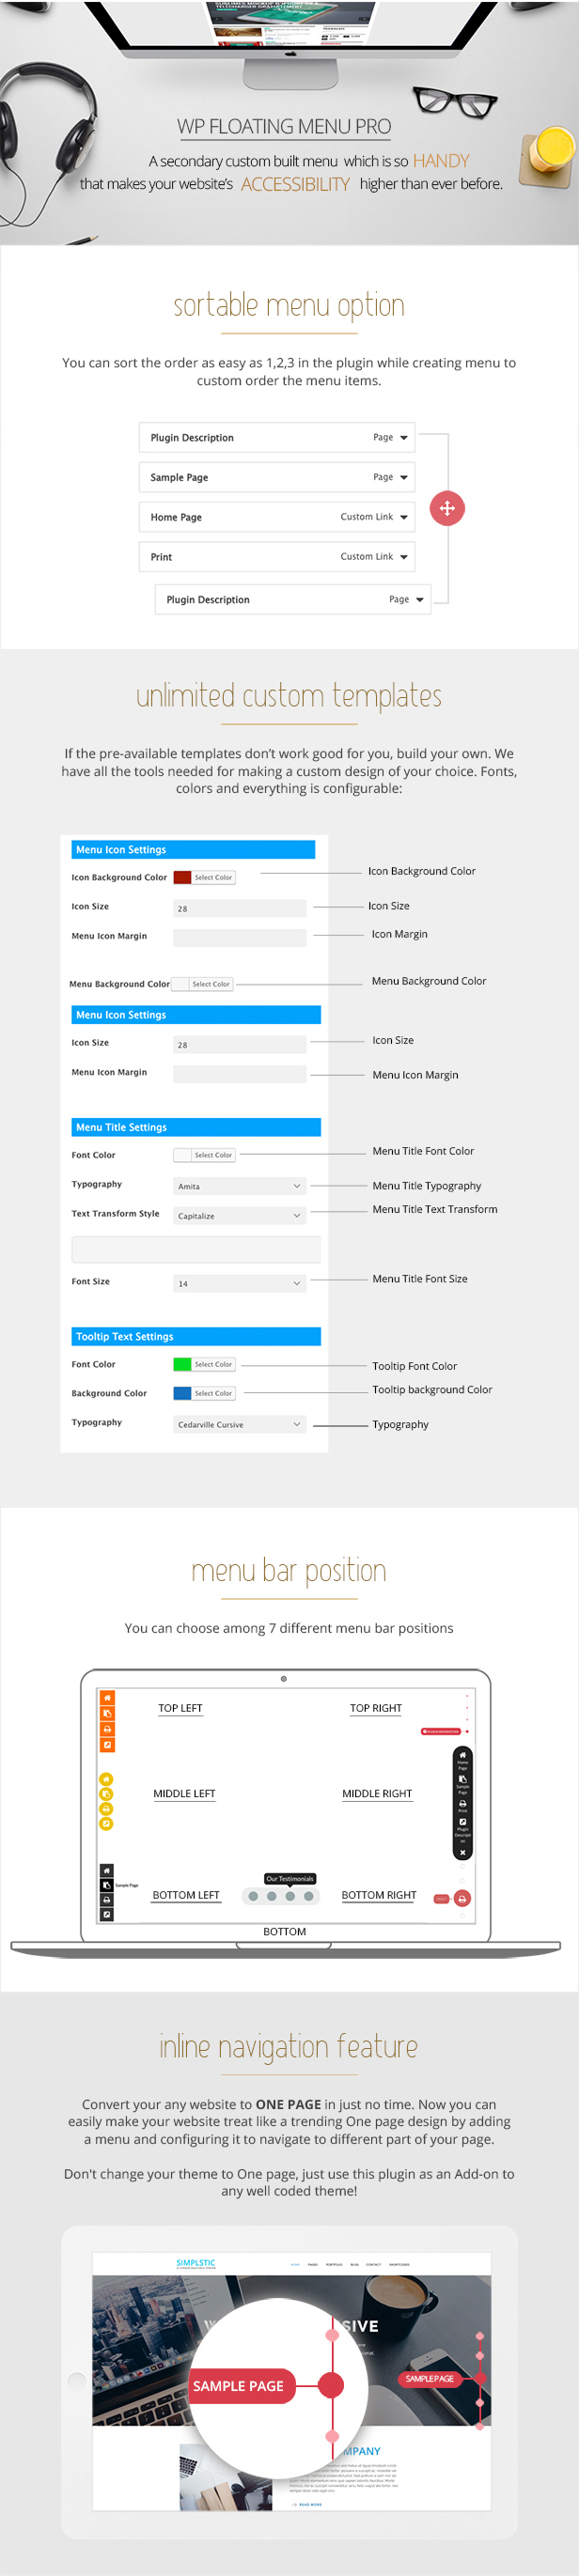 WP Floating Menu Pro - One page navigator, sticky menu for WordPress - 4